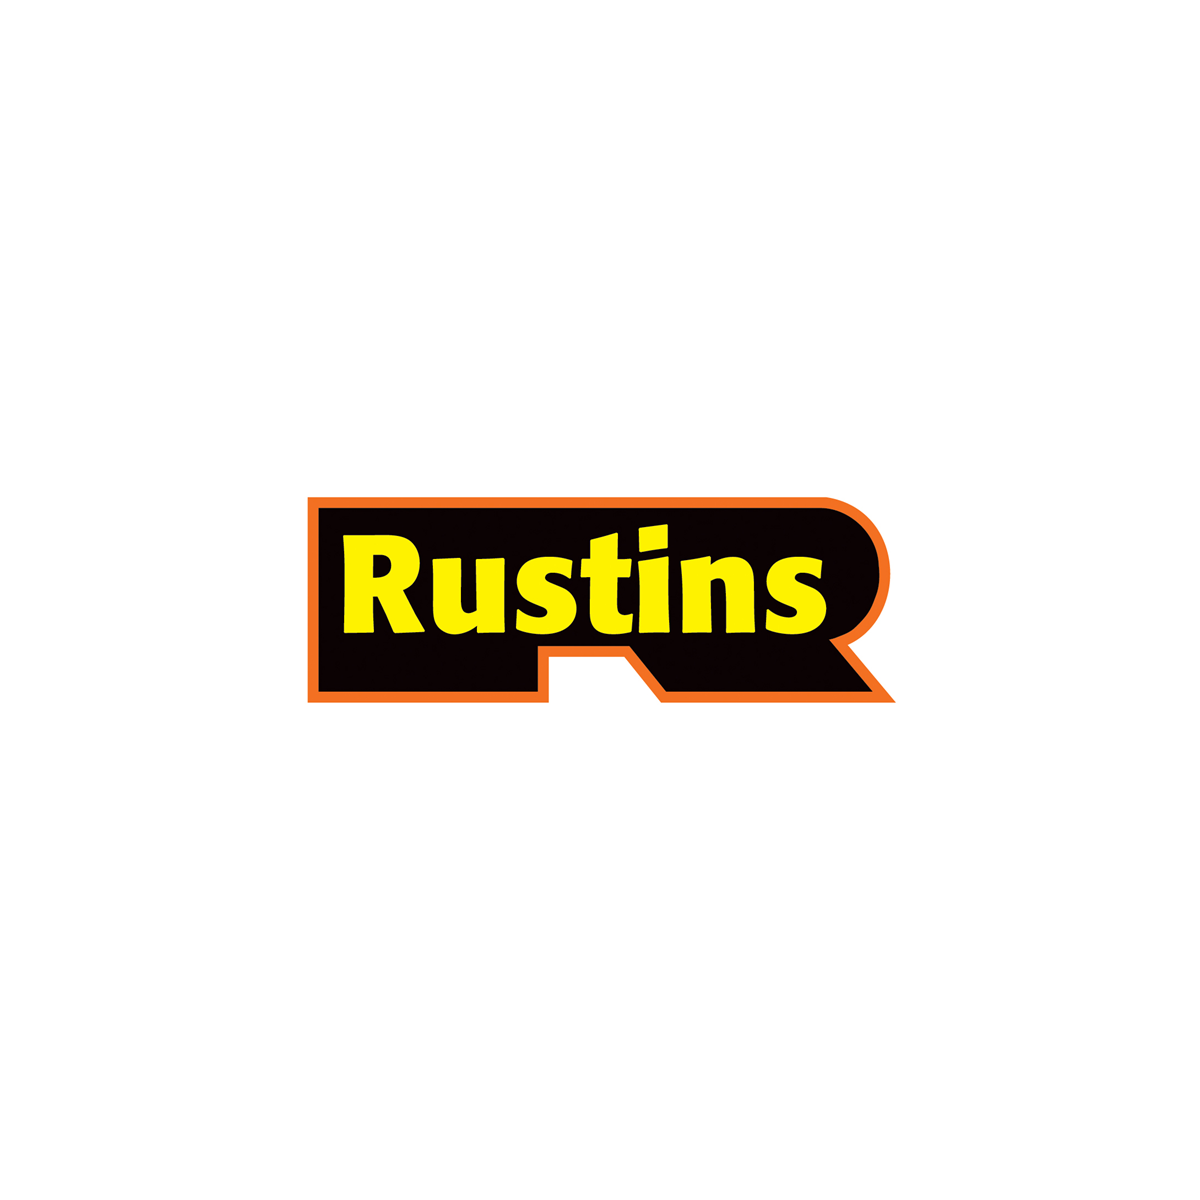 Where to buy Rustins Wood Dye